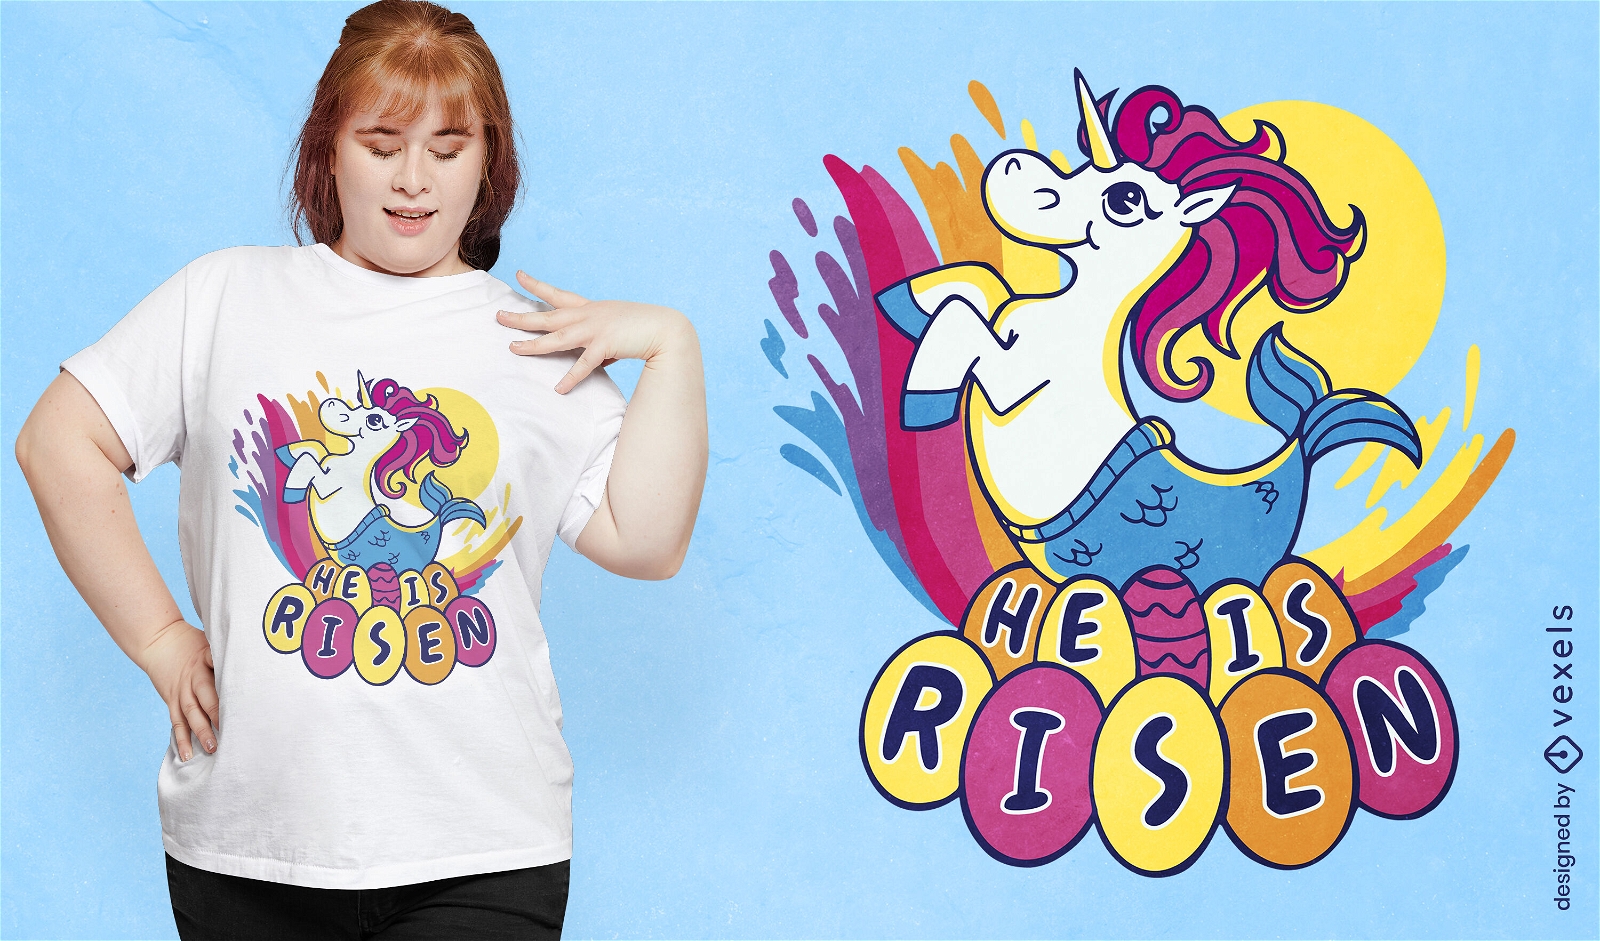 Mermaid unicorn cartoon t-shirt design